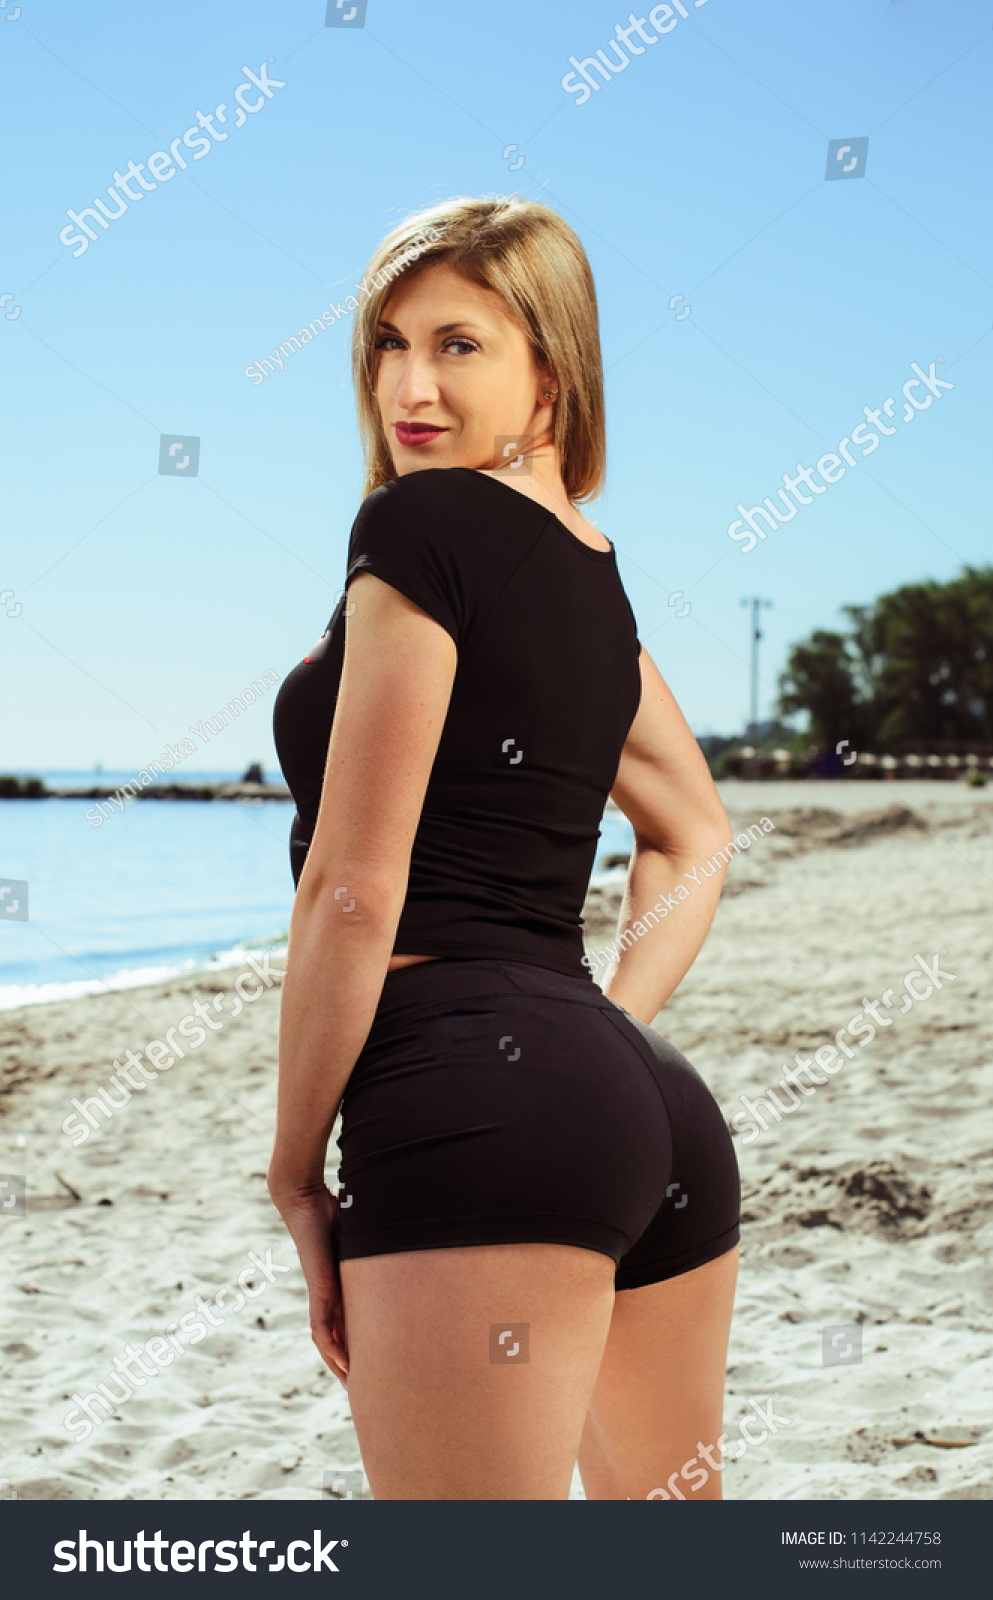 Girl With Beautiful Ass